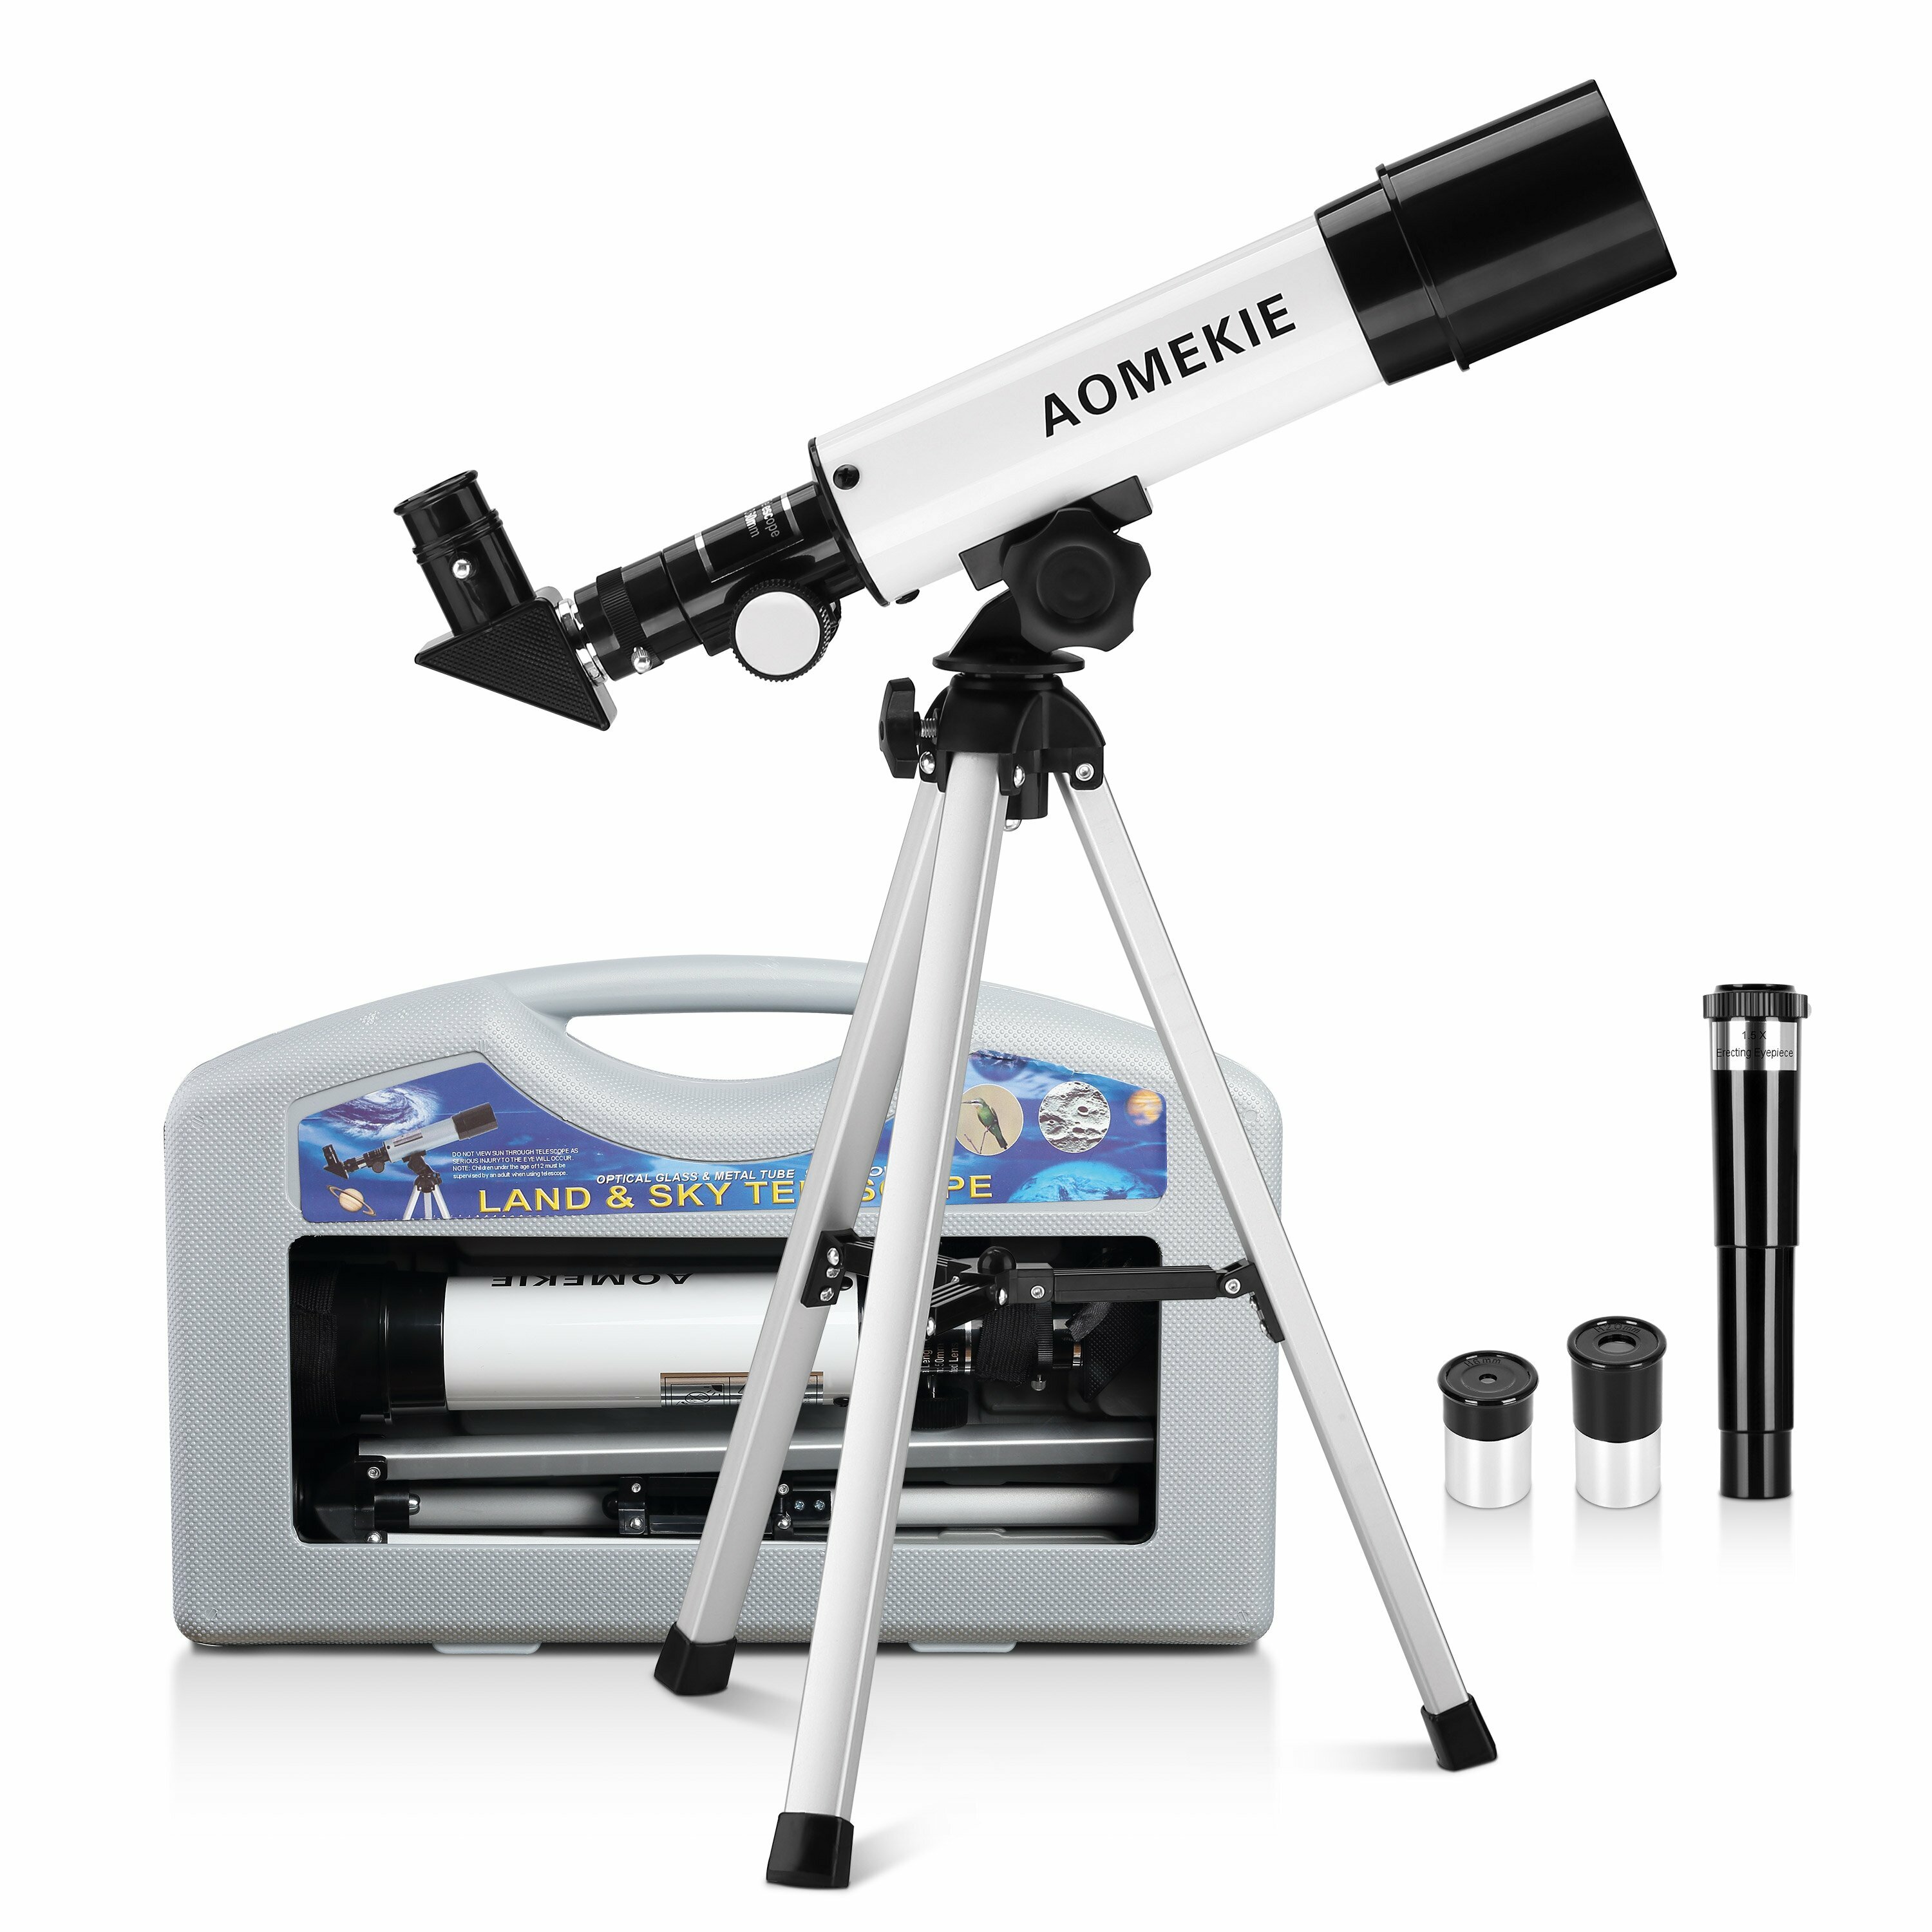 AOMEKIE Αστρονομικό Τηλεσκόπιο για Παιδιά 50/360mm Τηλεσκόπιο για Αρχάριους Αστρονόμους με Θήκη Μεταφοράς, Τρίποδο, Ορθοστάτη Οπτική